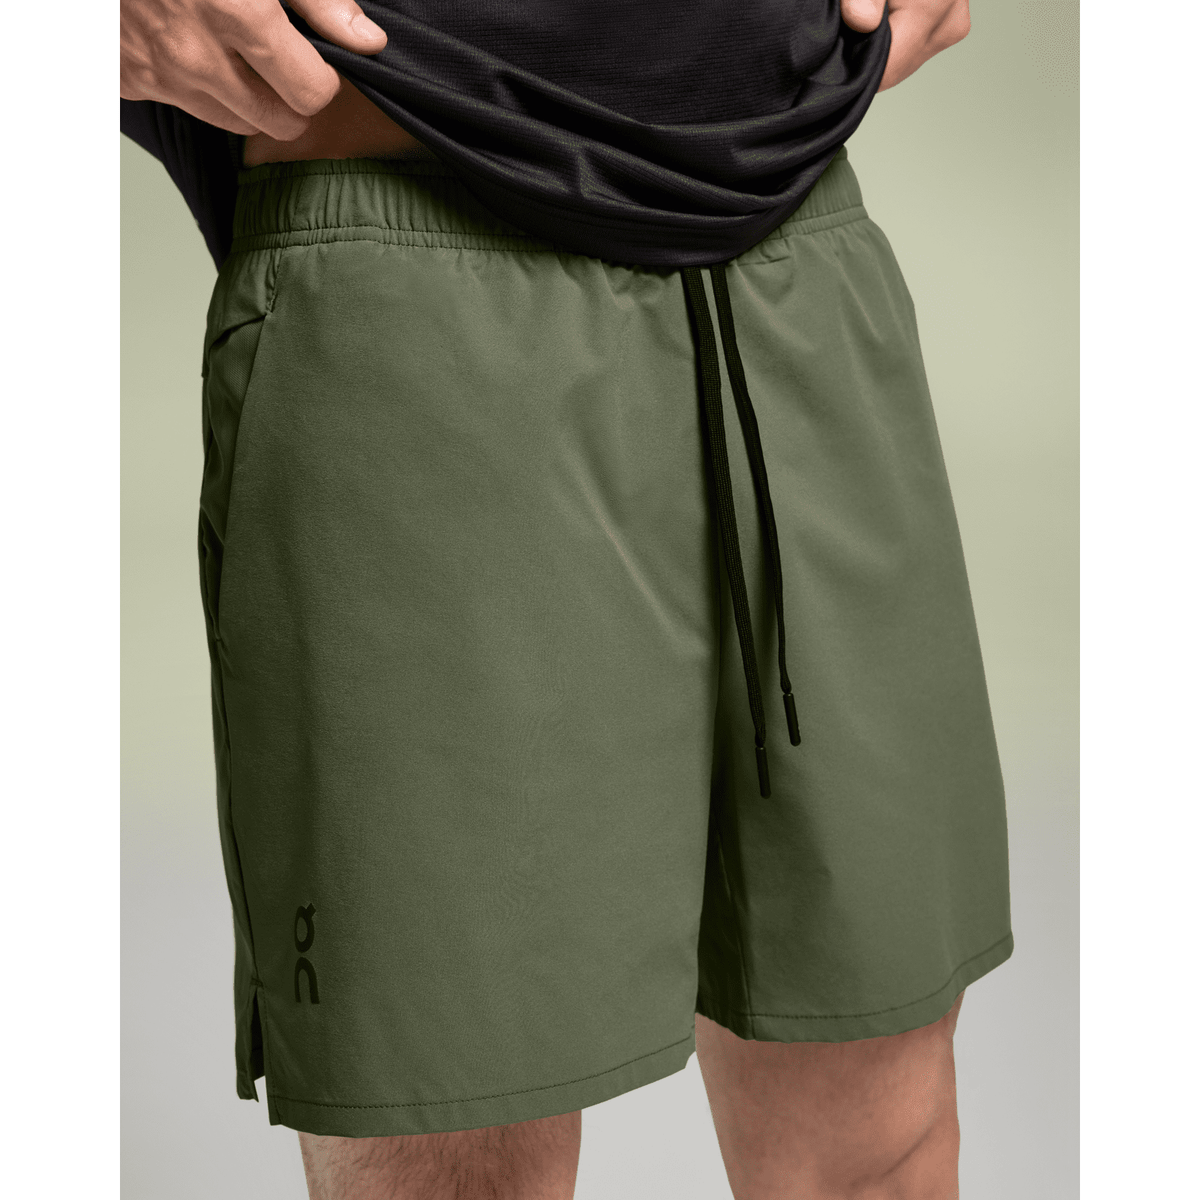 On Essential Shorts Mens - APPAREL - Mens Shorts